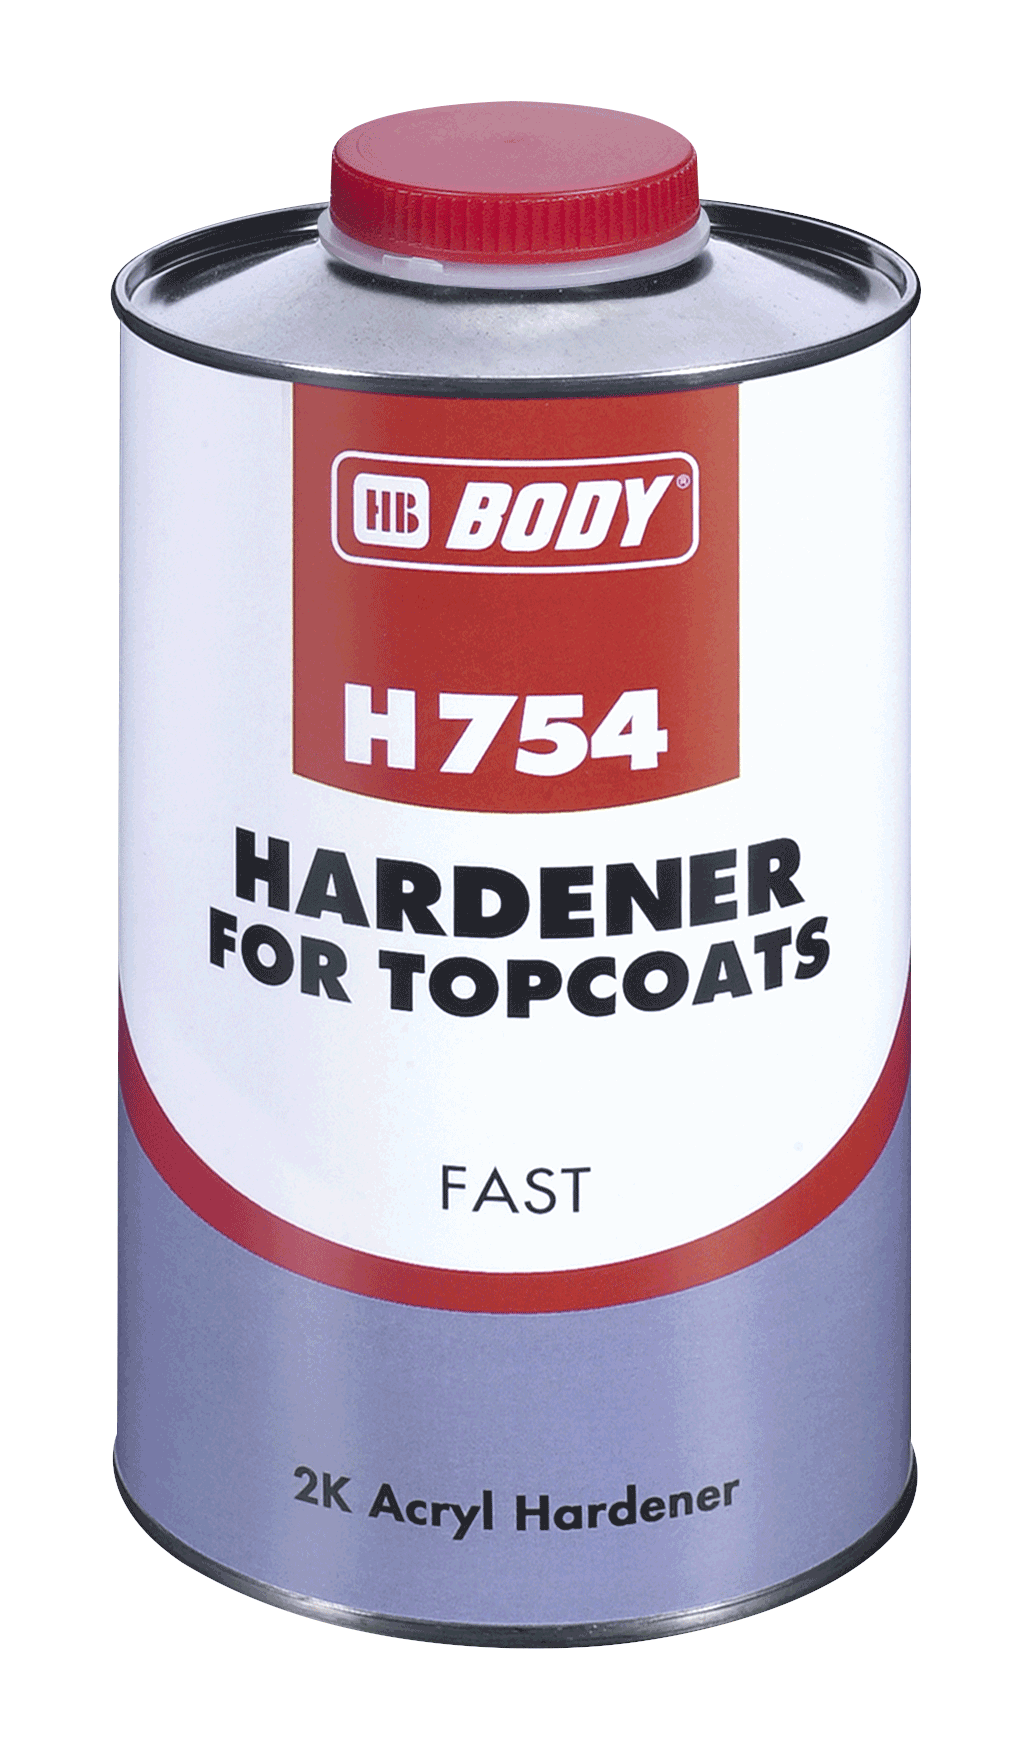 HB BODY Body 754 Hardener fast  500ml